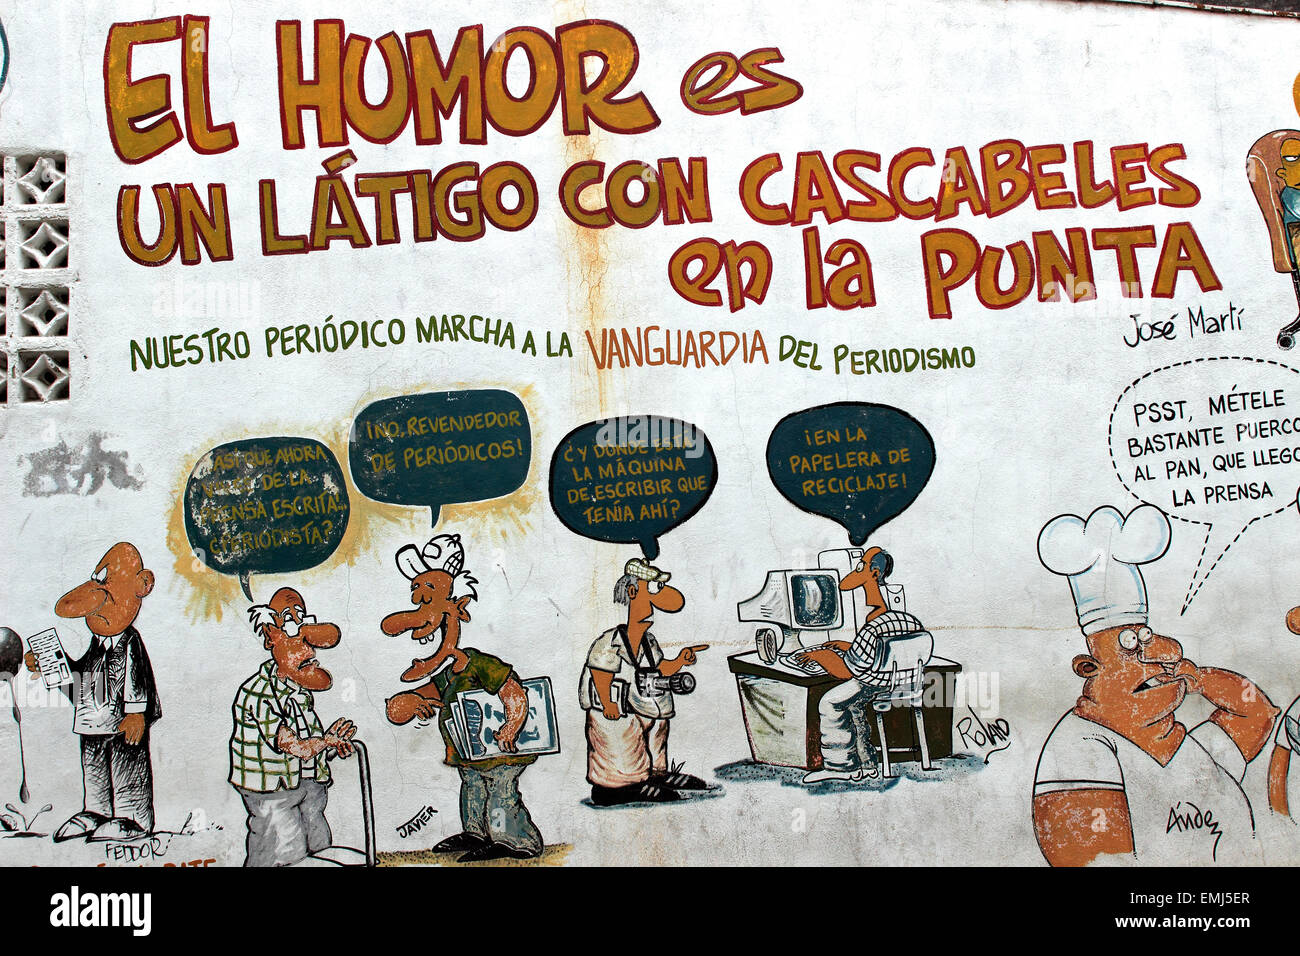 Wall art advertising a humor magazine Santa Clara Cuba Stock Photo